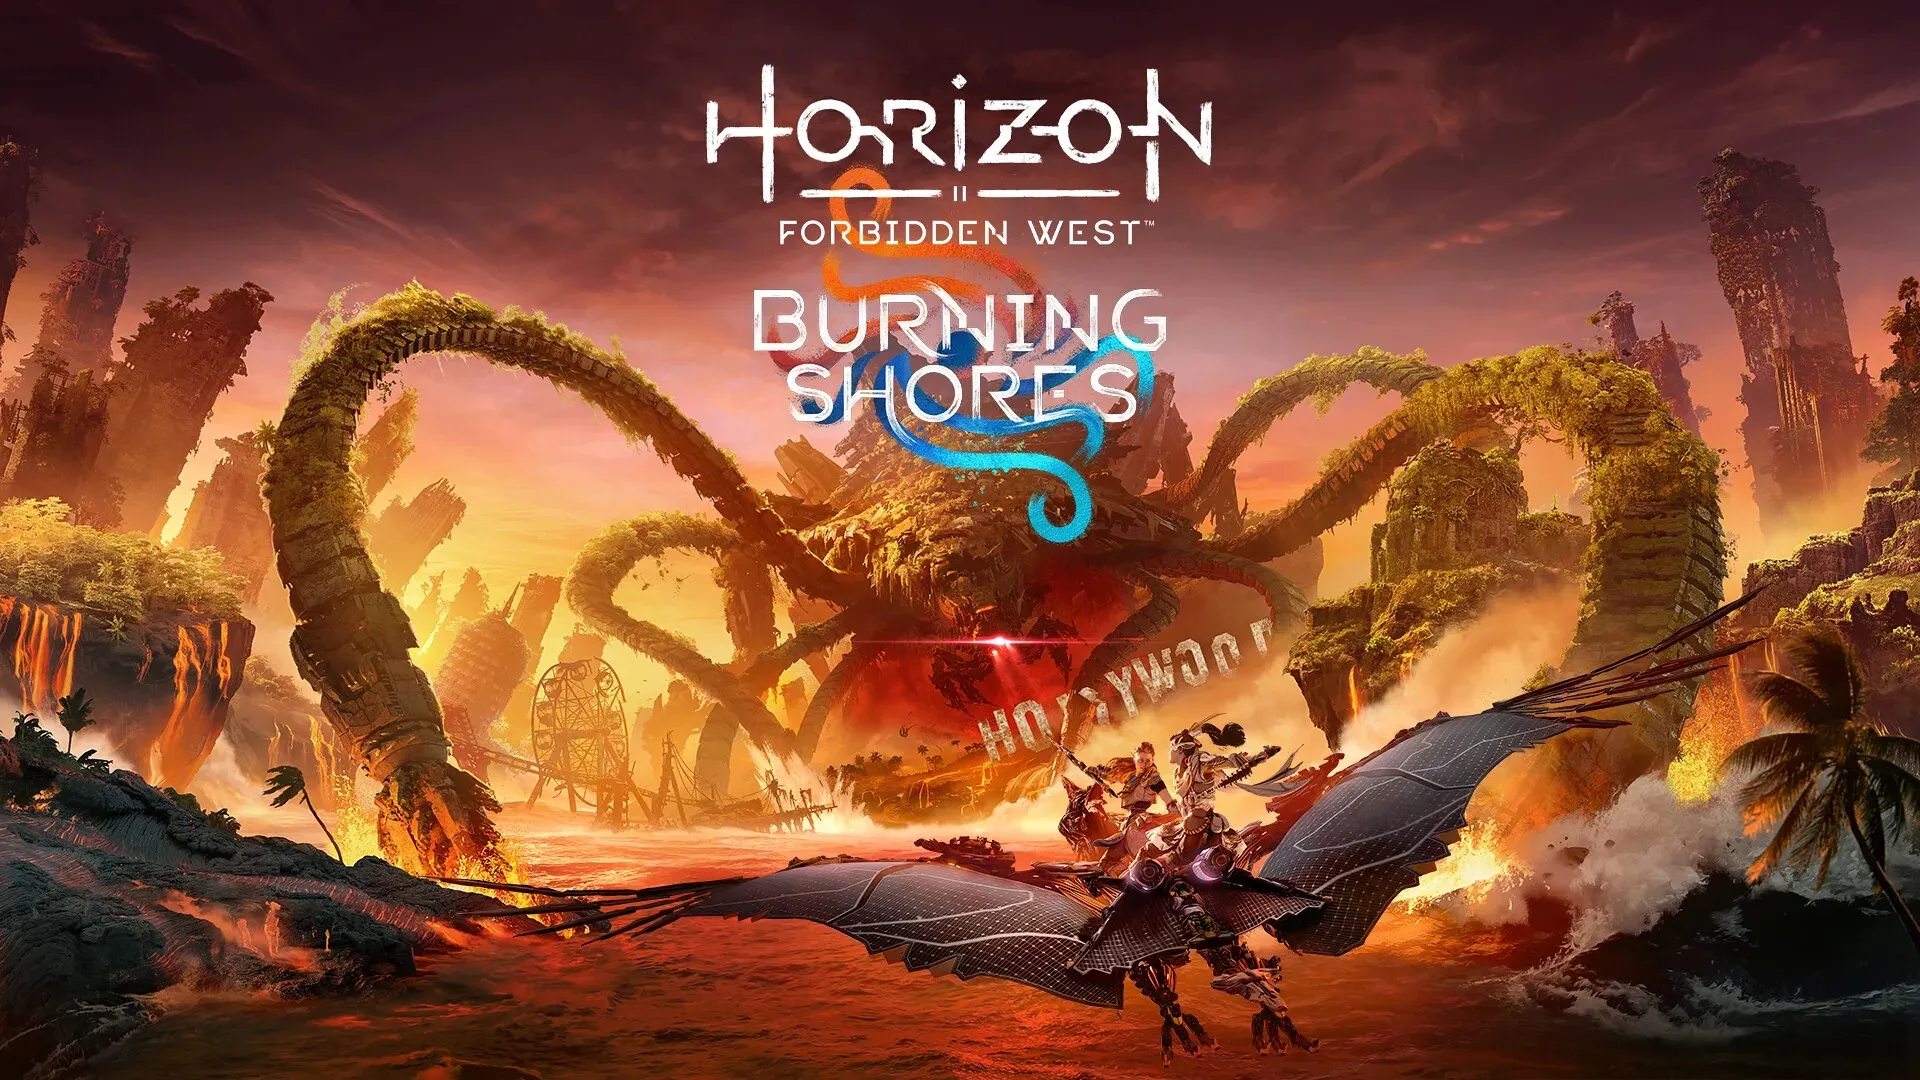 Desert posle gozbe: Horizon Forbidden West: Burning Shores recenzija:  Nema preskakanja